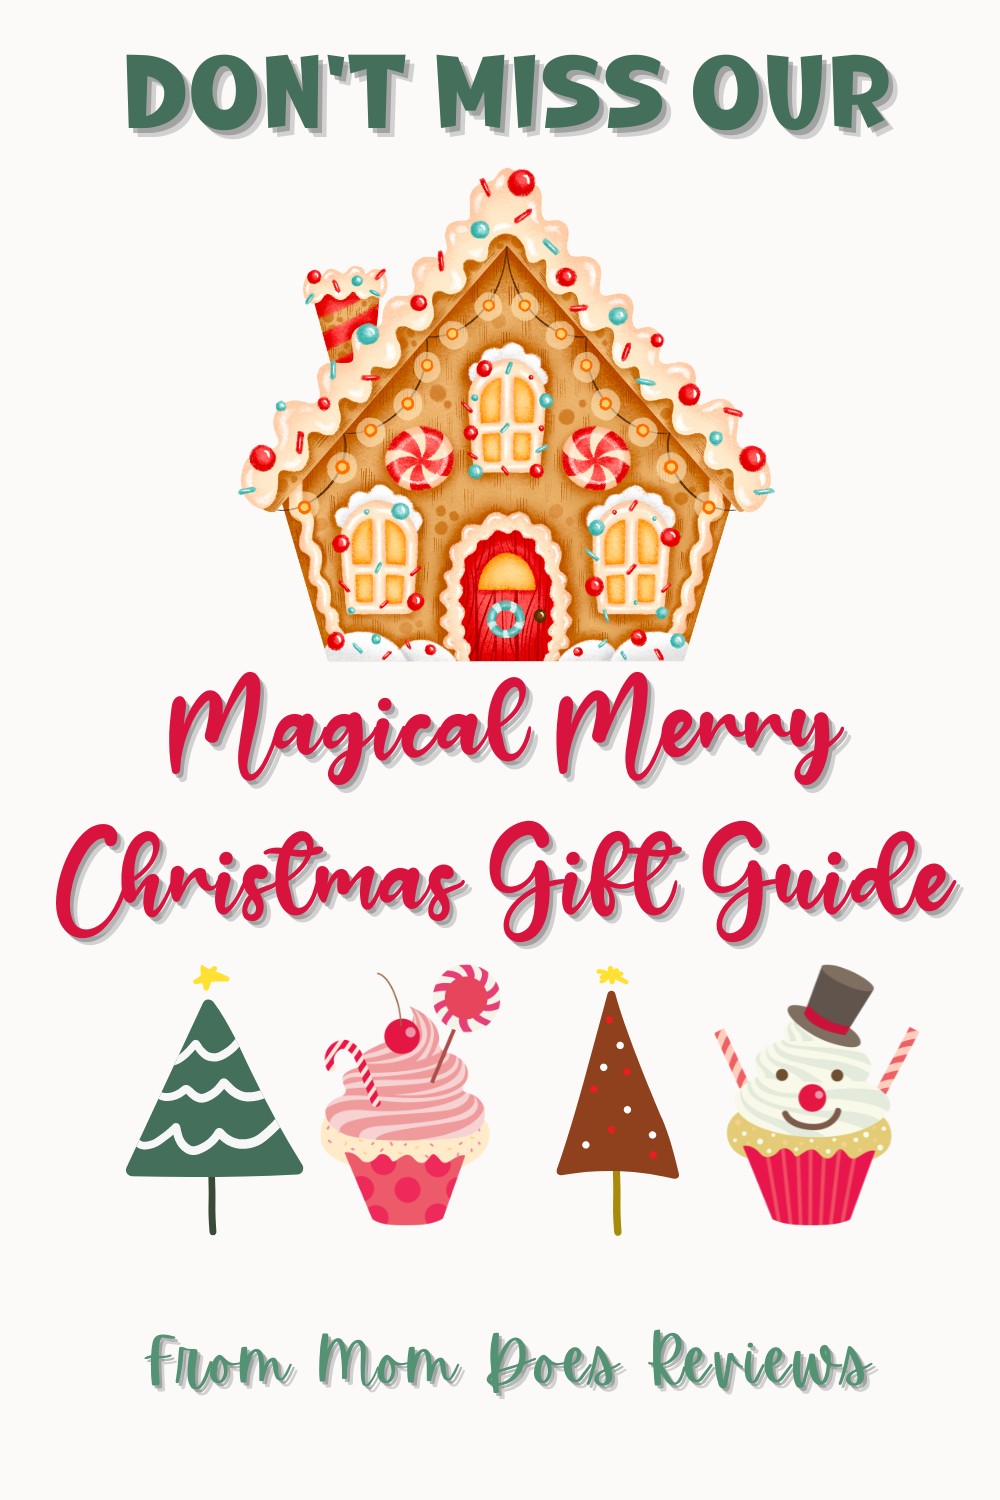 Magical Merry Christmas Gift Guide #MegaChristmas22